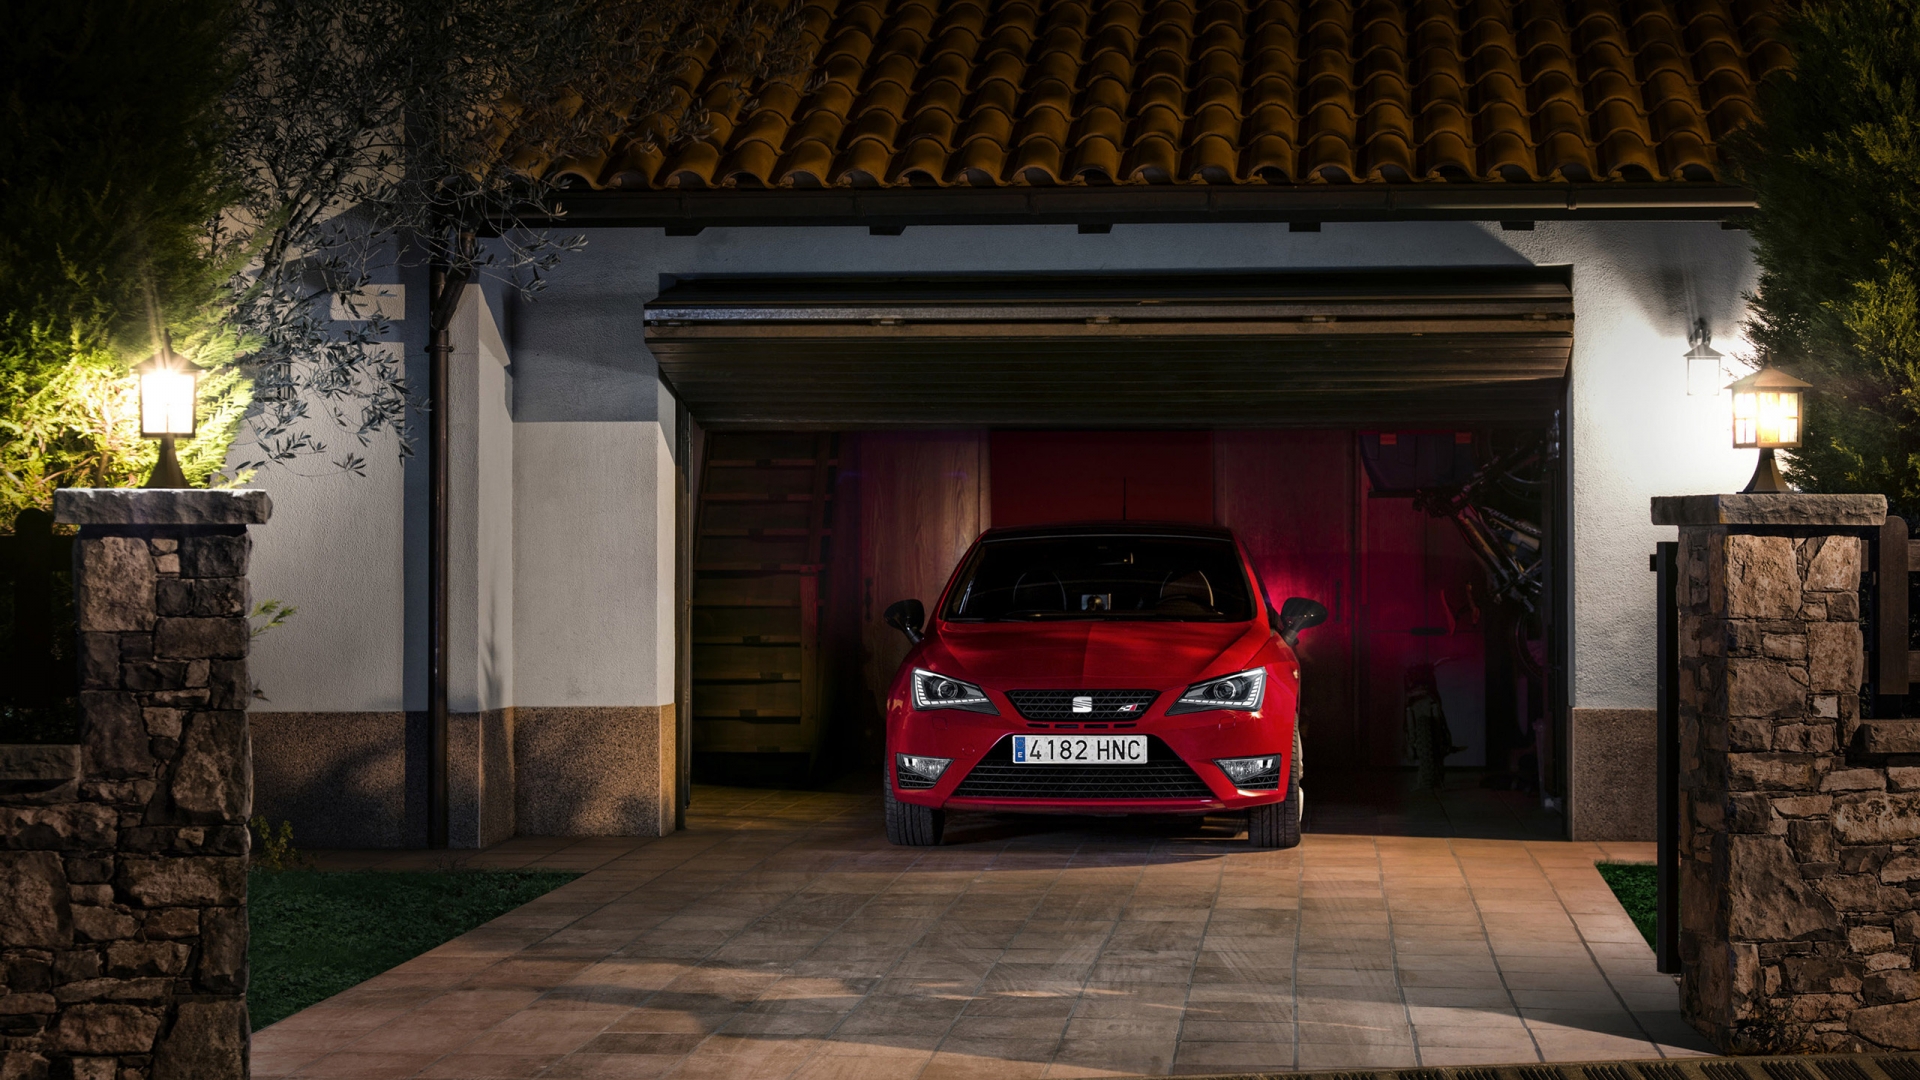 Red Seat Ibiza Cupra 2013 for 1920 x 1080 HDTV 1080p resolution